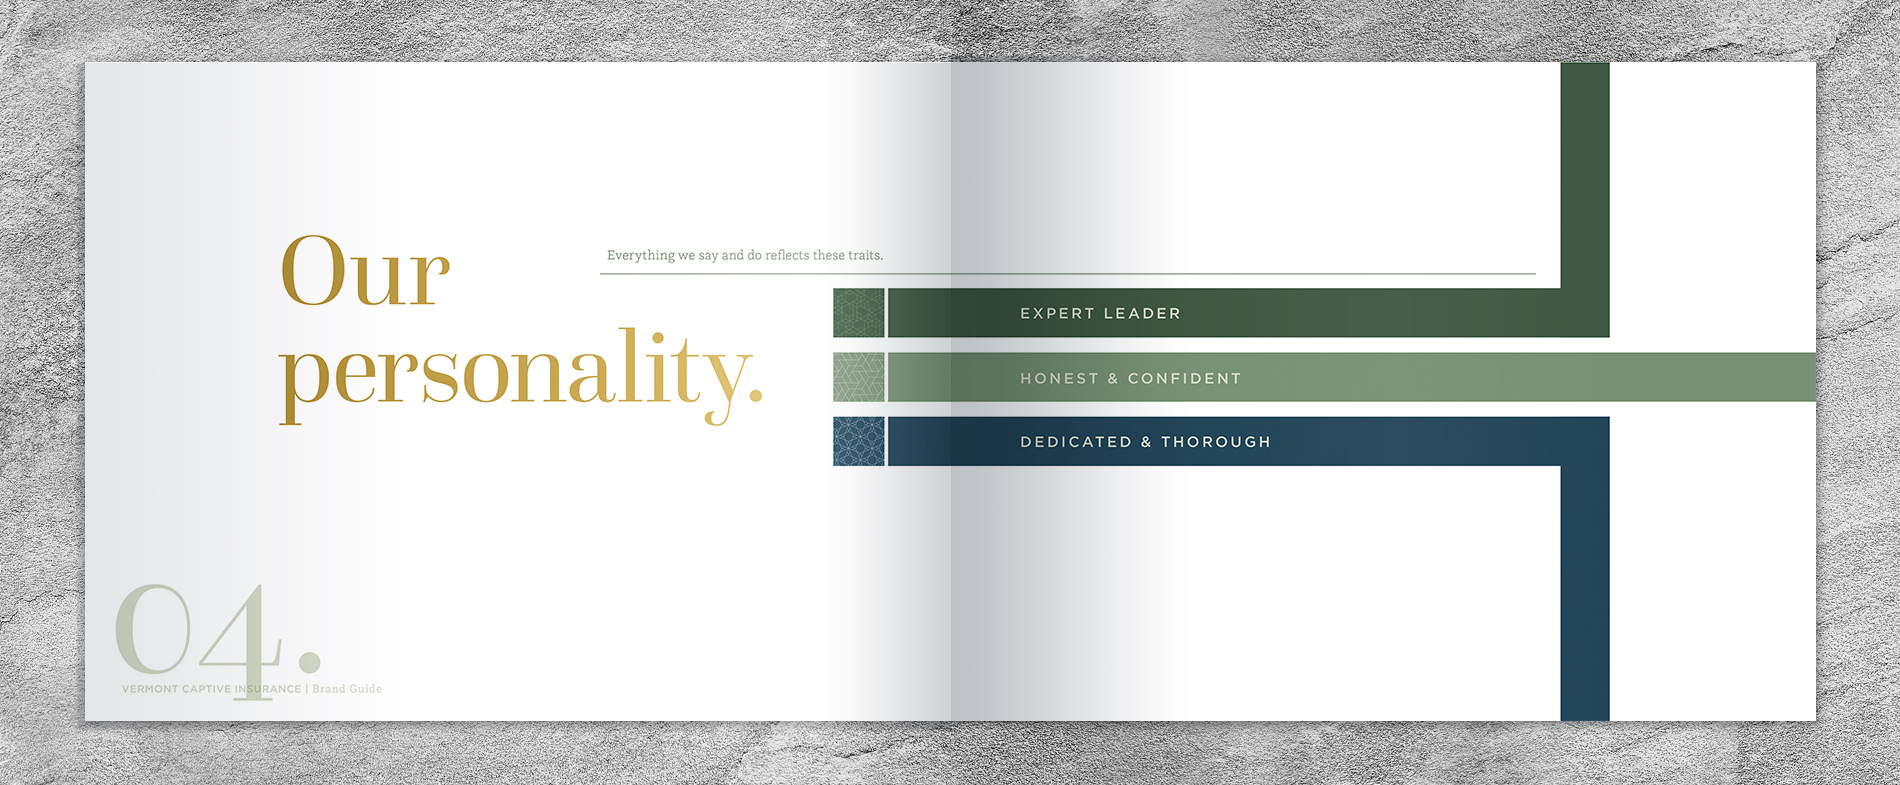 Brand identity book design for Vermont Captive Insurance